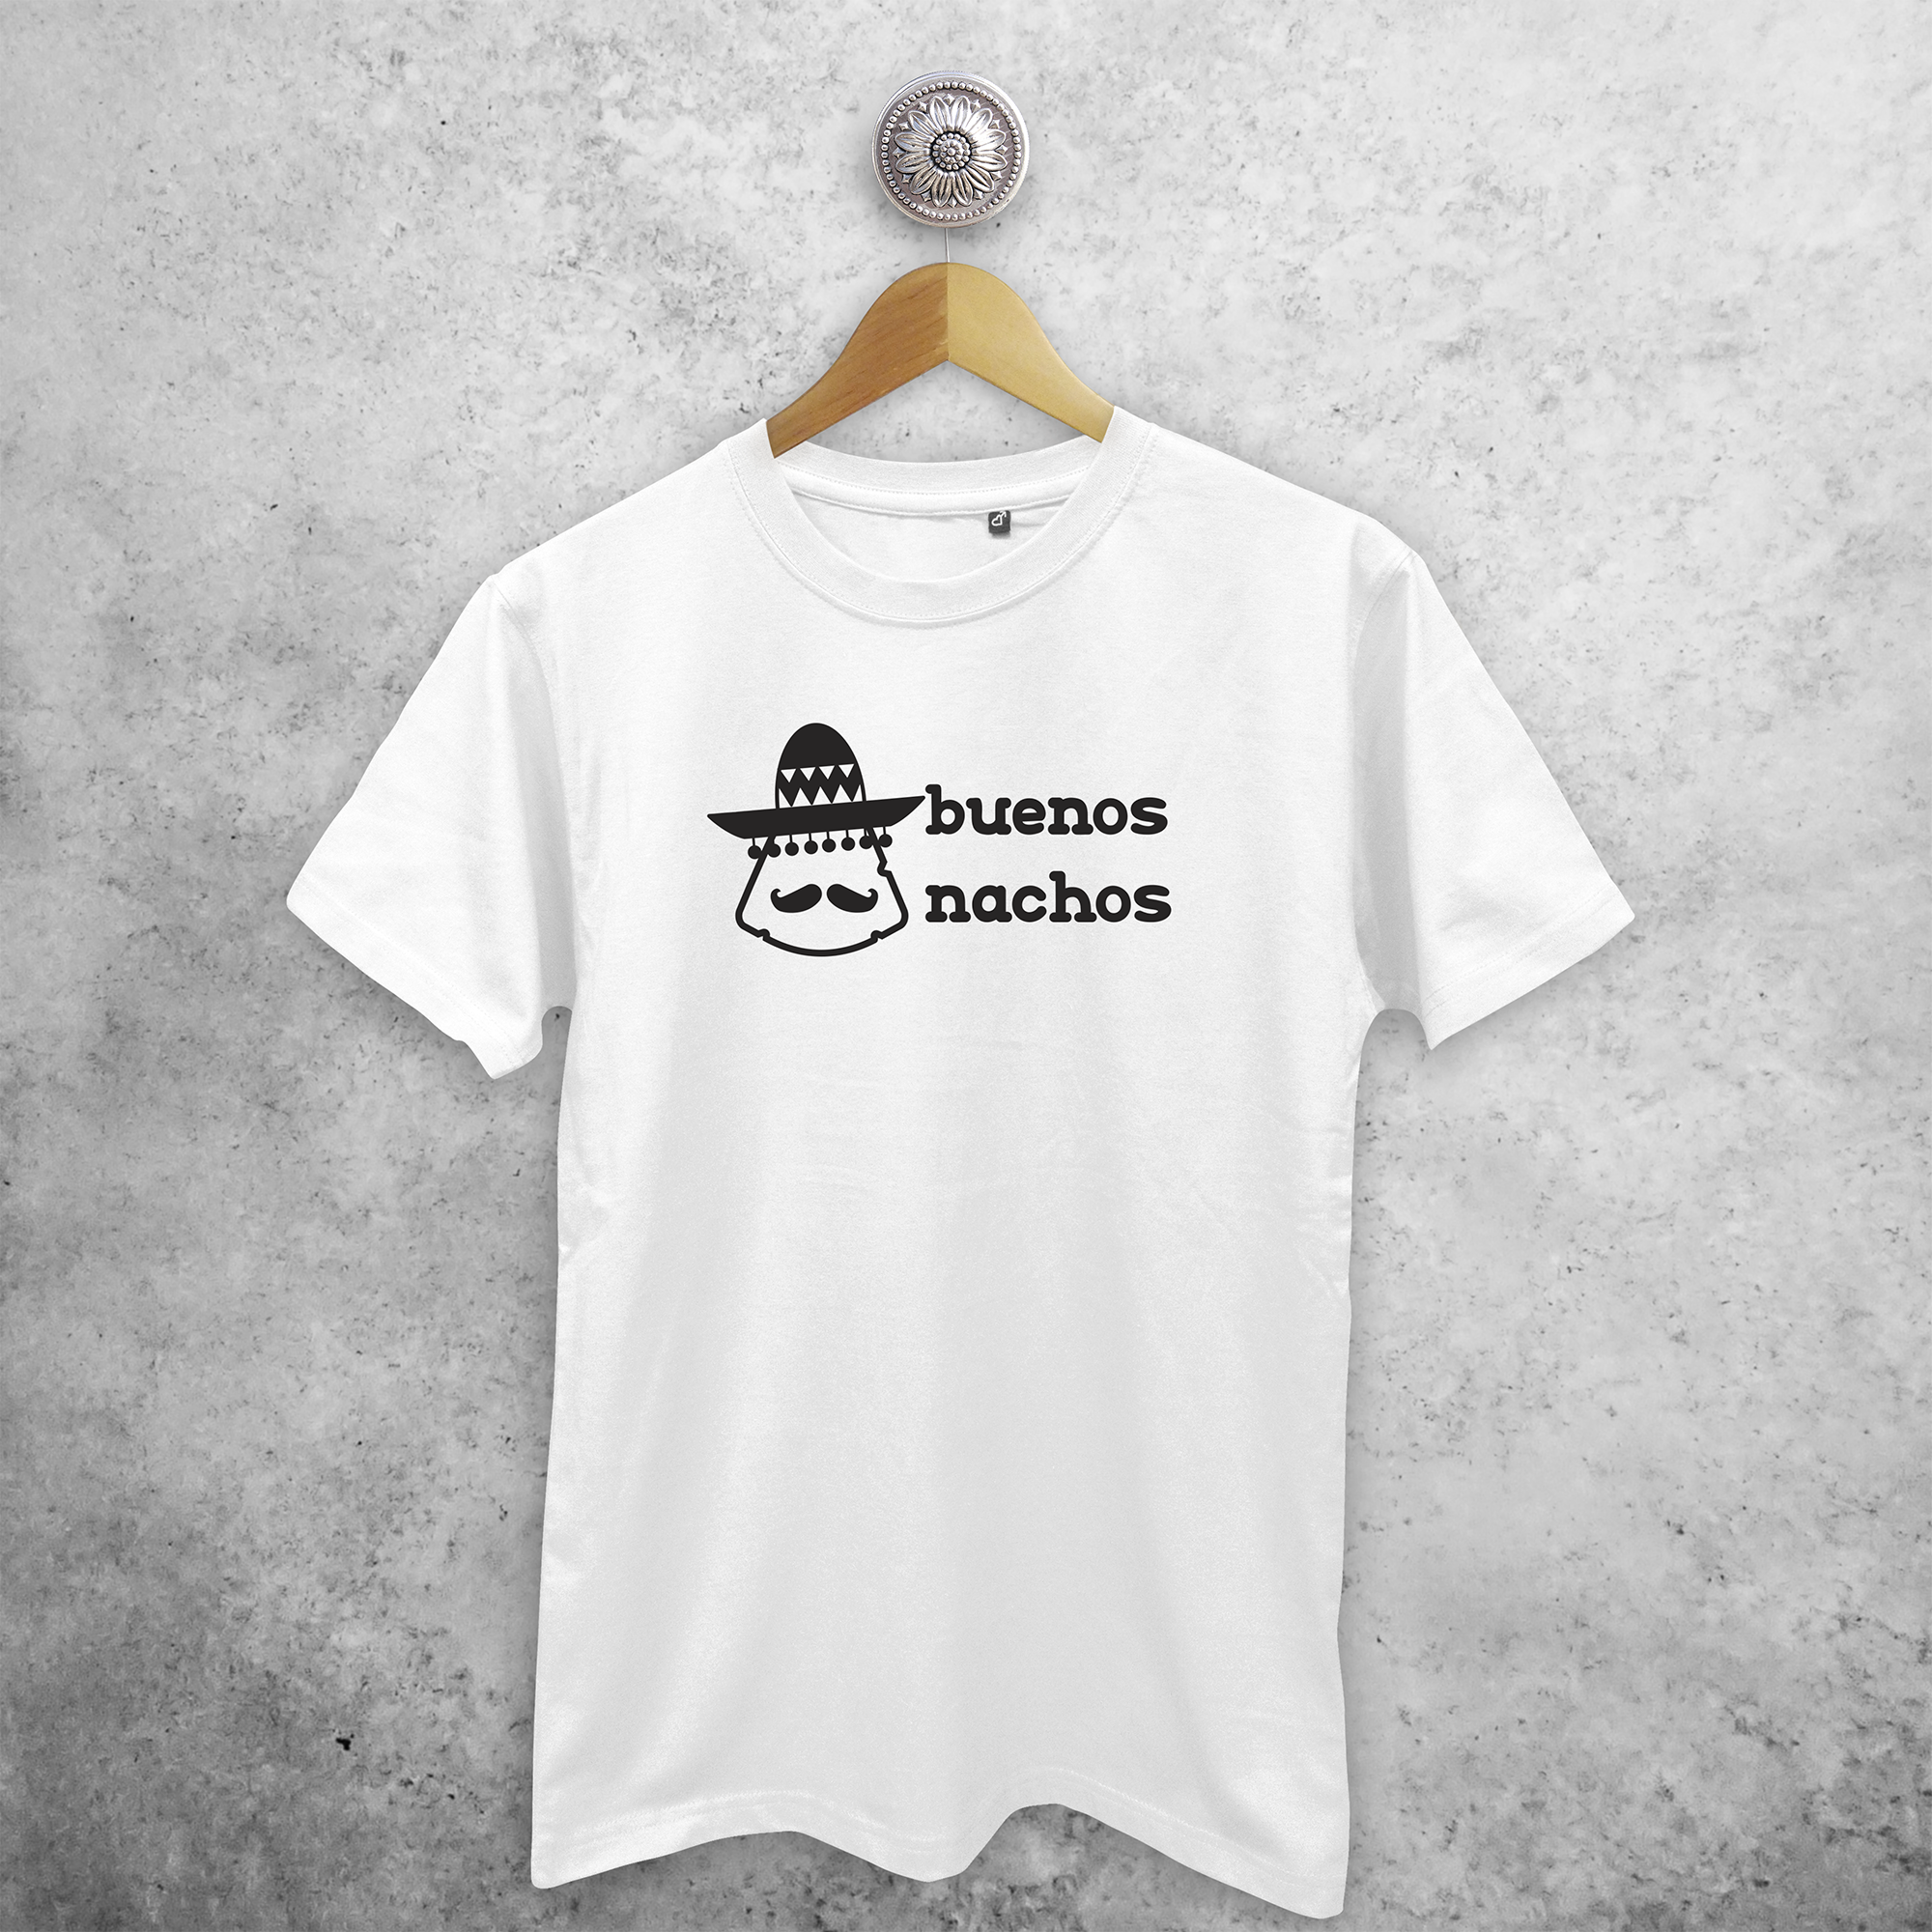 'Buenos nachos' adult shirt